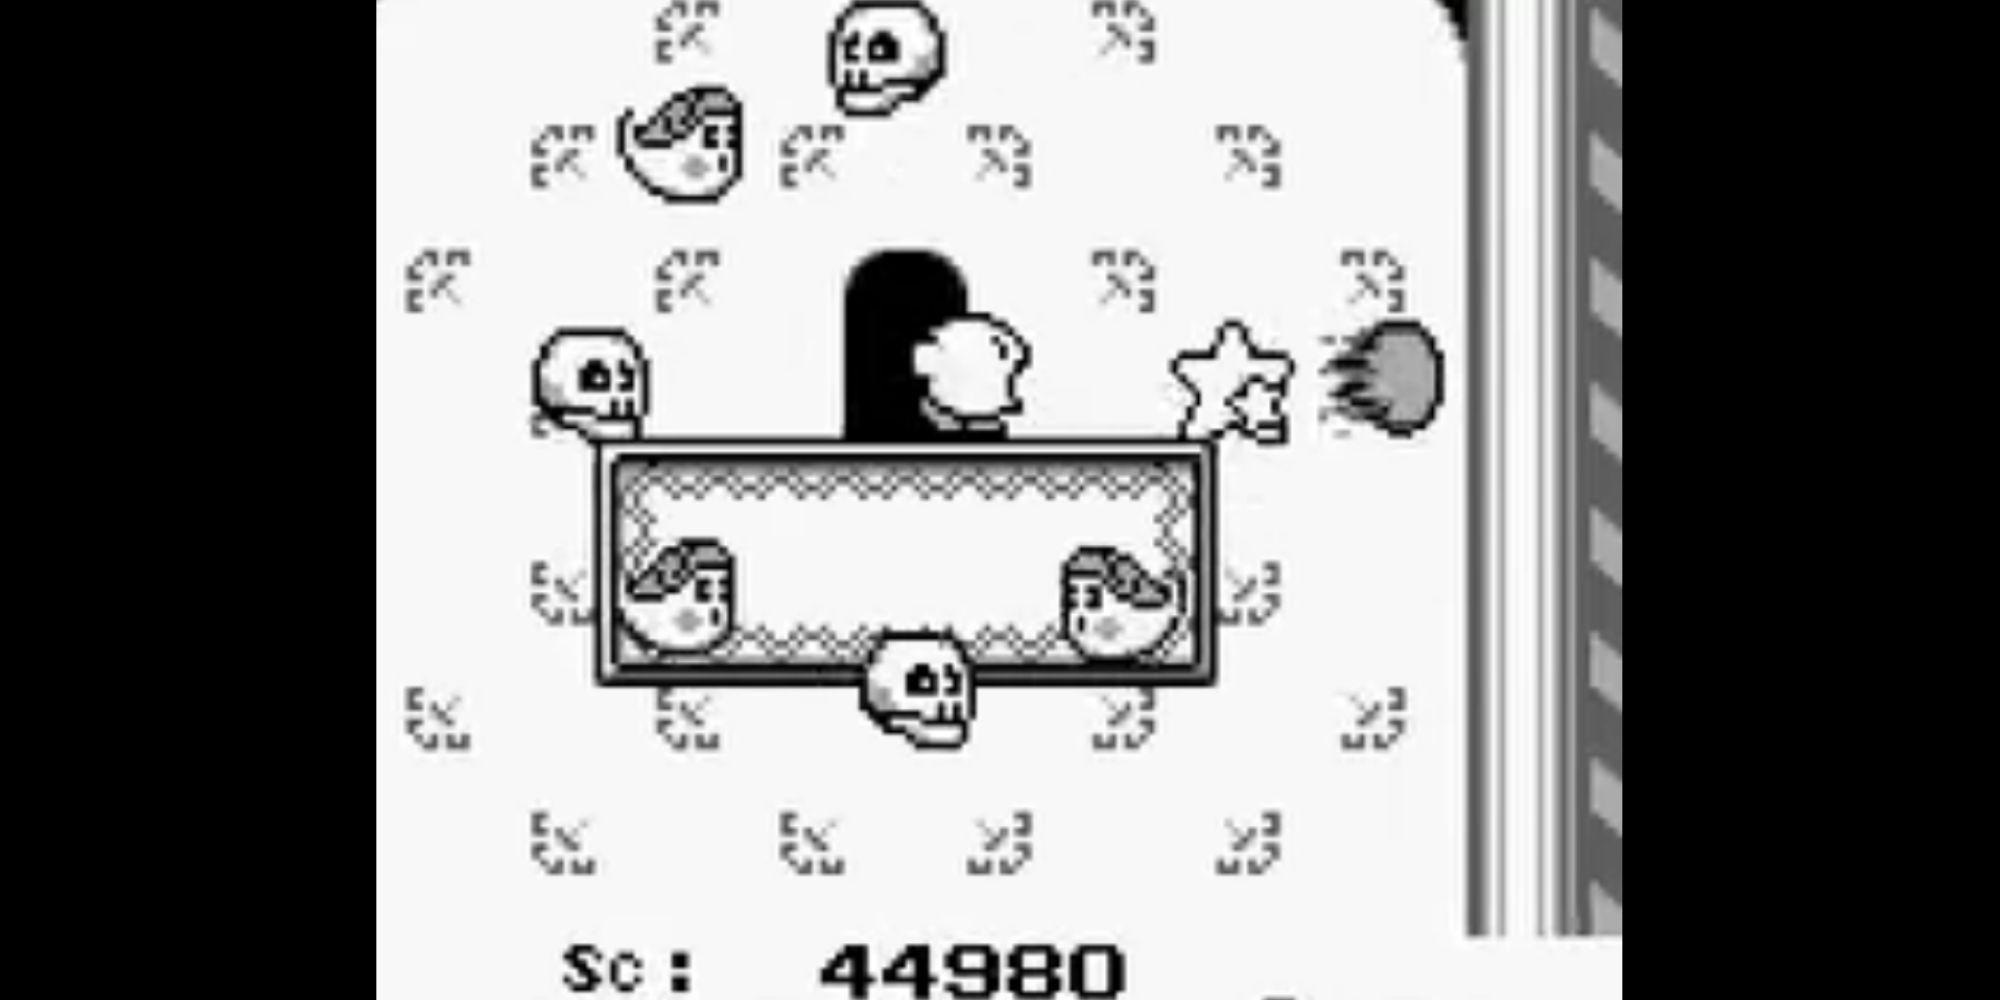 Kirby blows air as enemies circle around him in Kirby's Dream Land